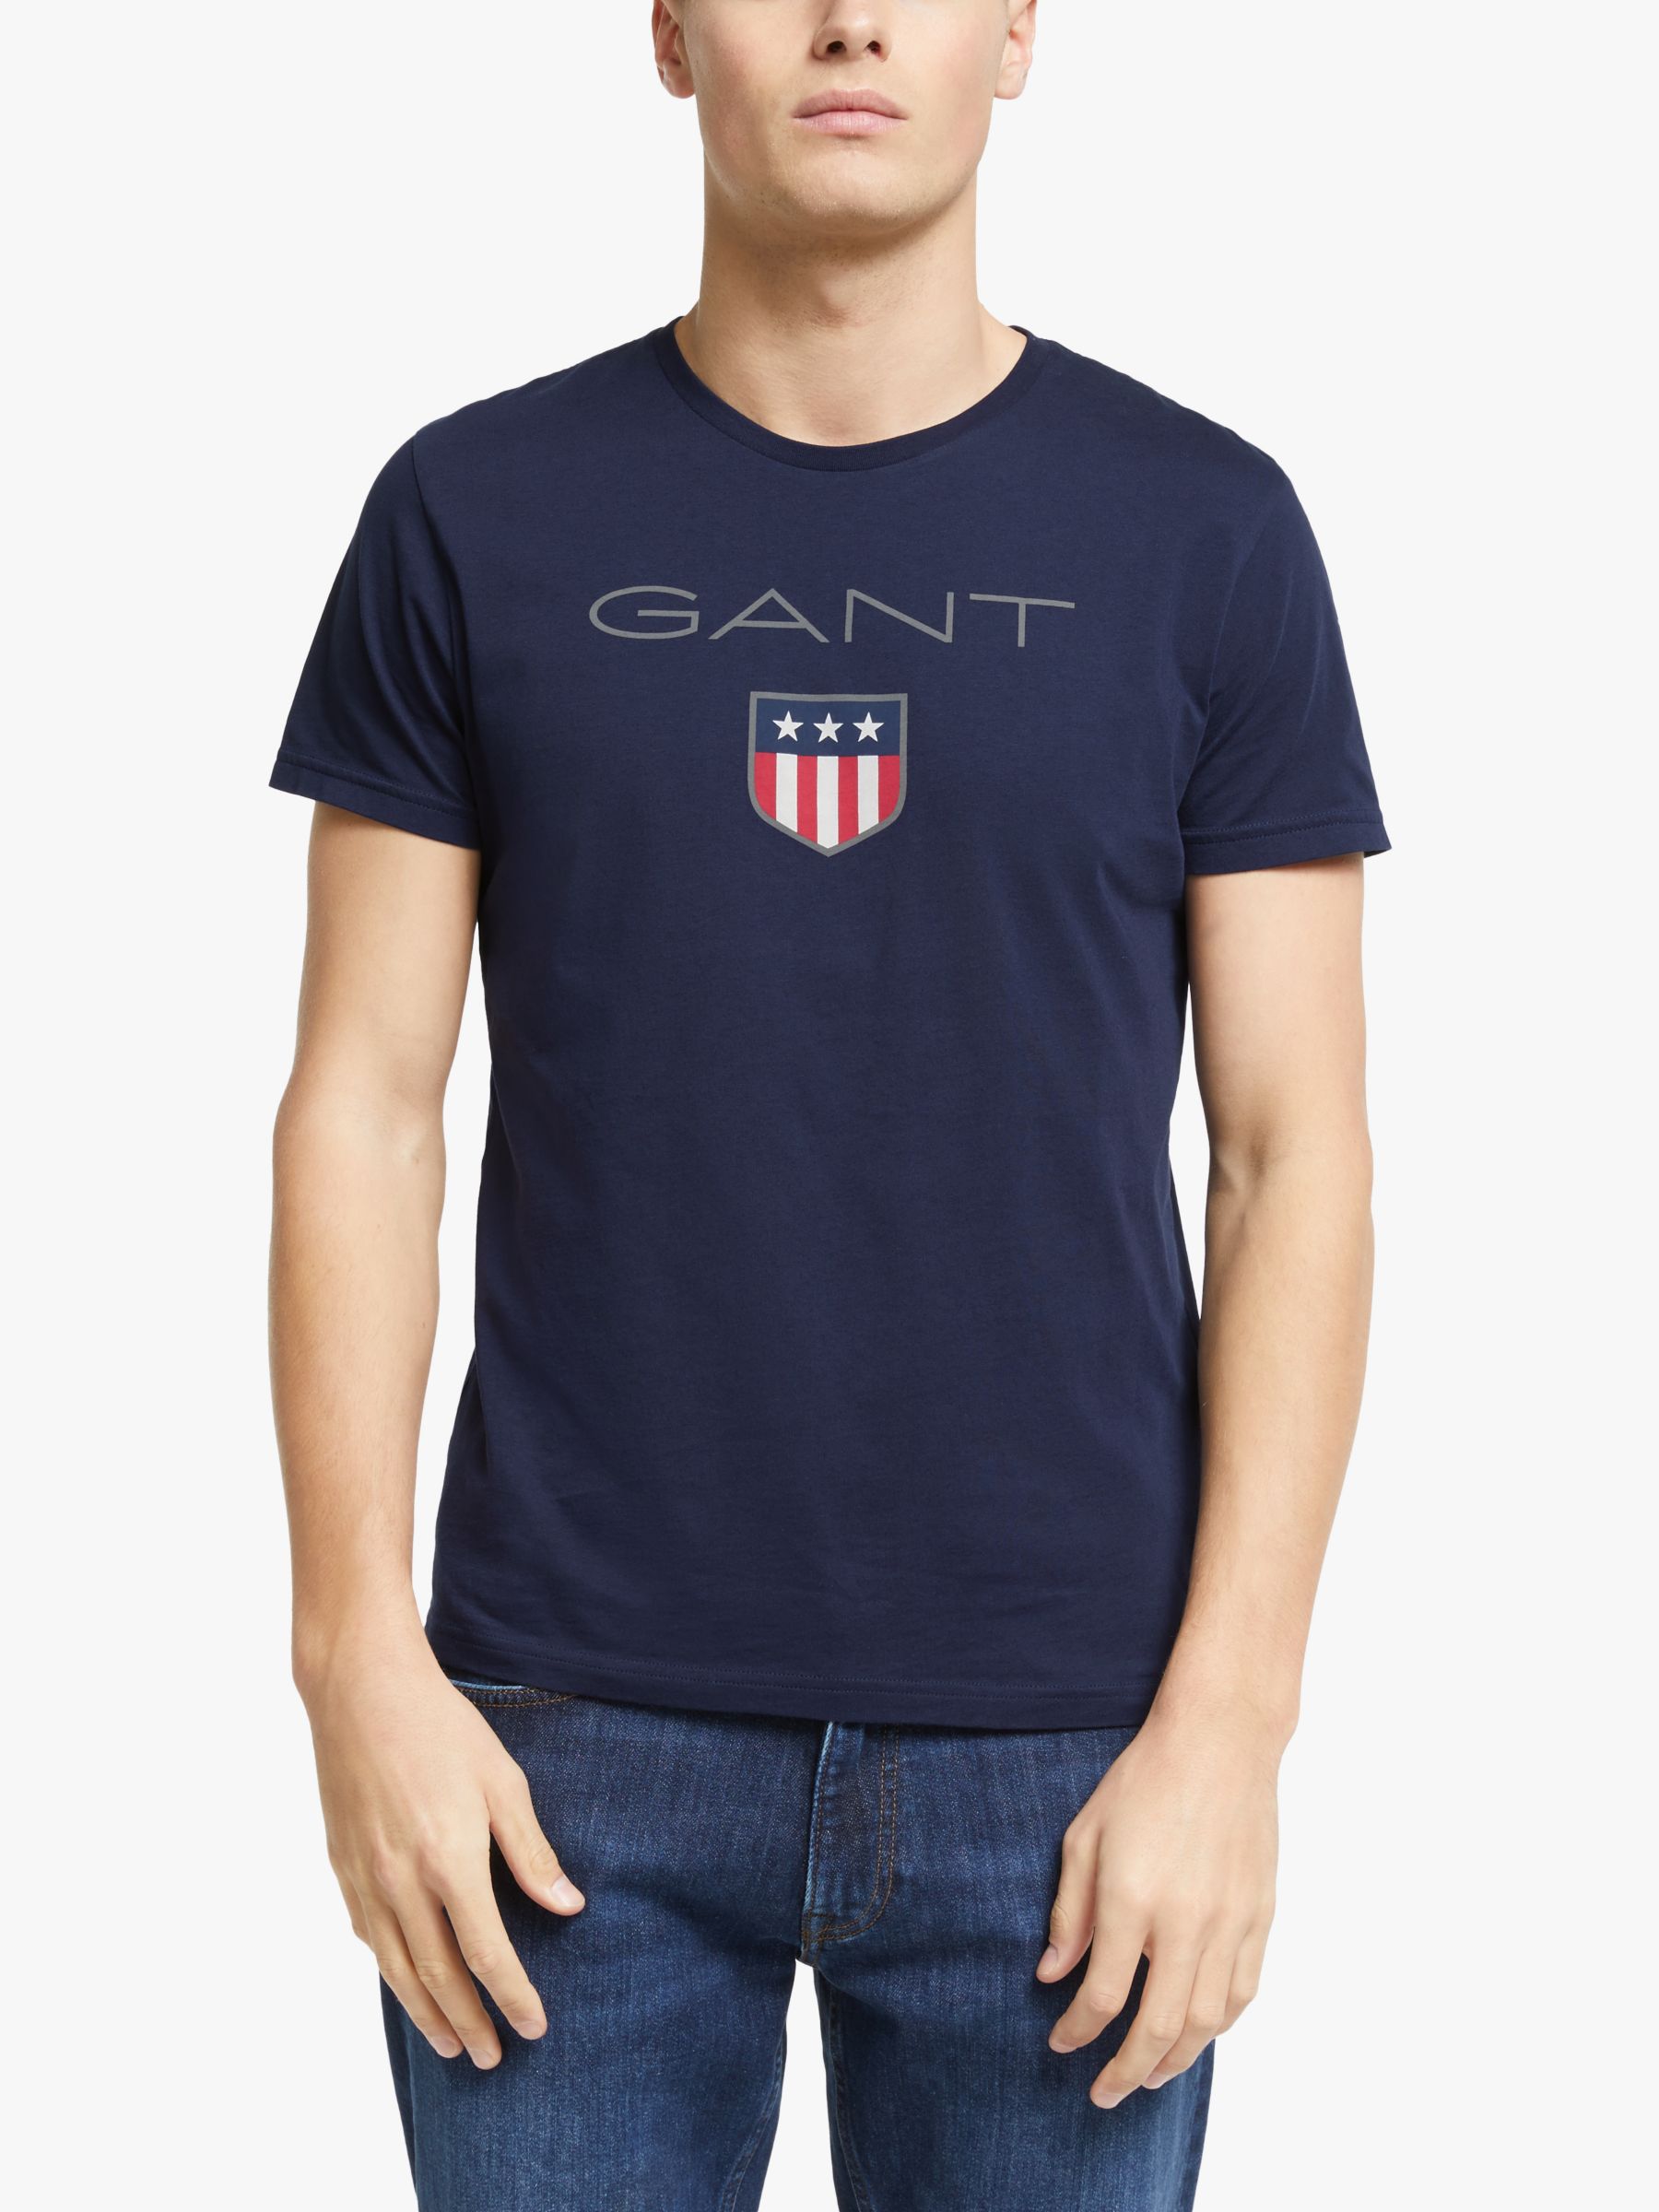 GANT Shield Logo T-Shirt, Navy at John Lewis & Partners